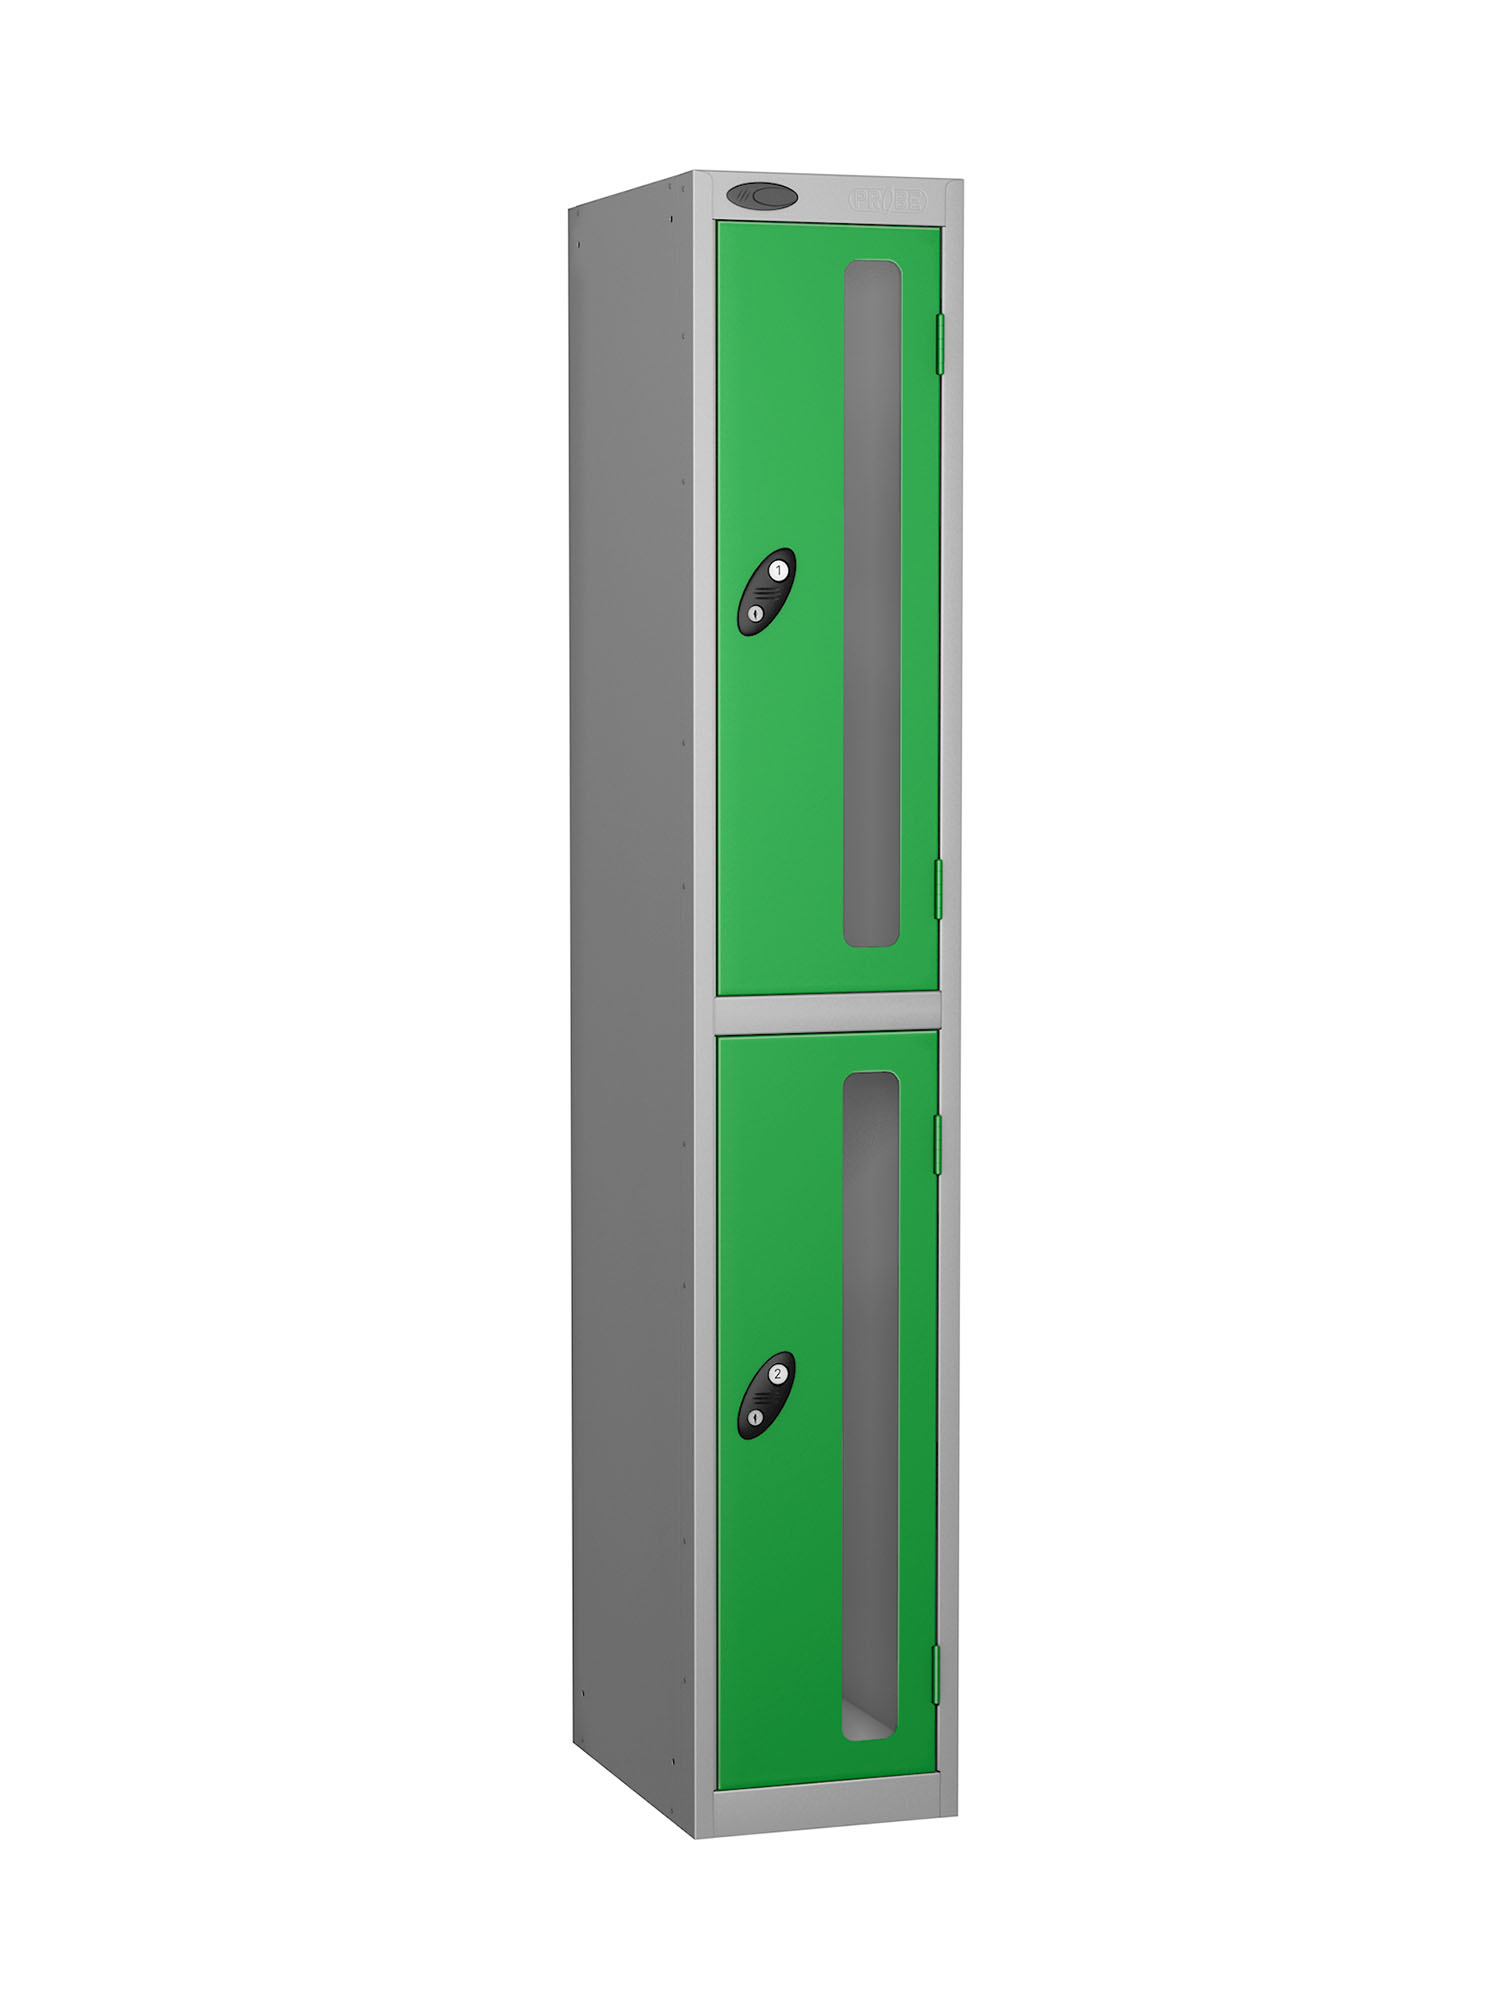 Probe 2 doors vision panel anti-stock theft locker green